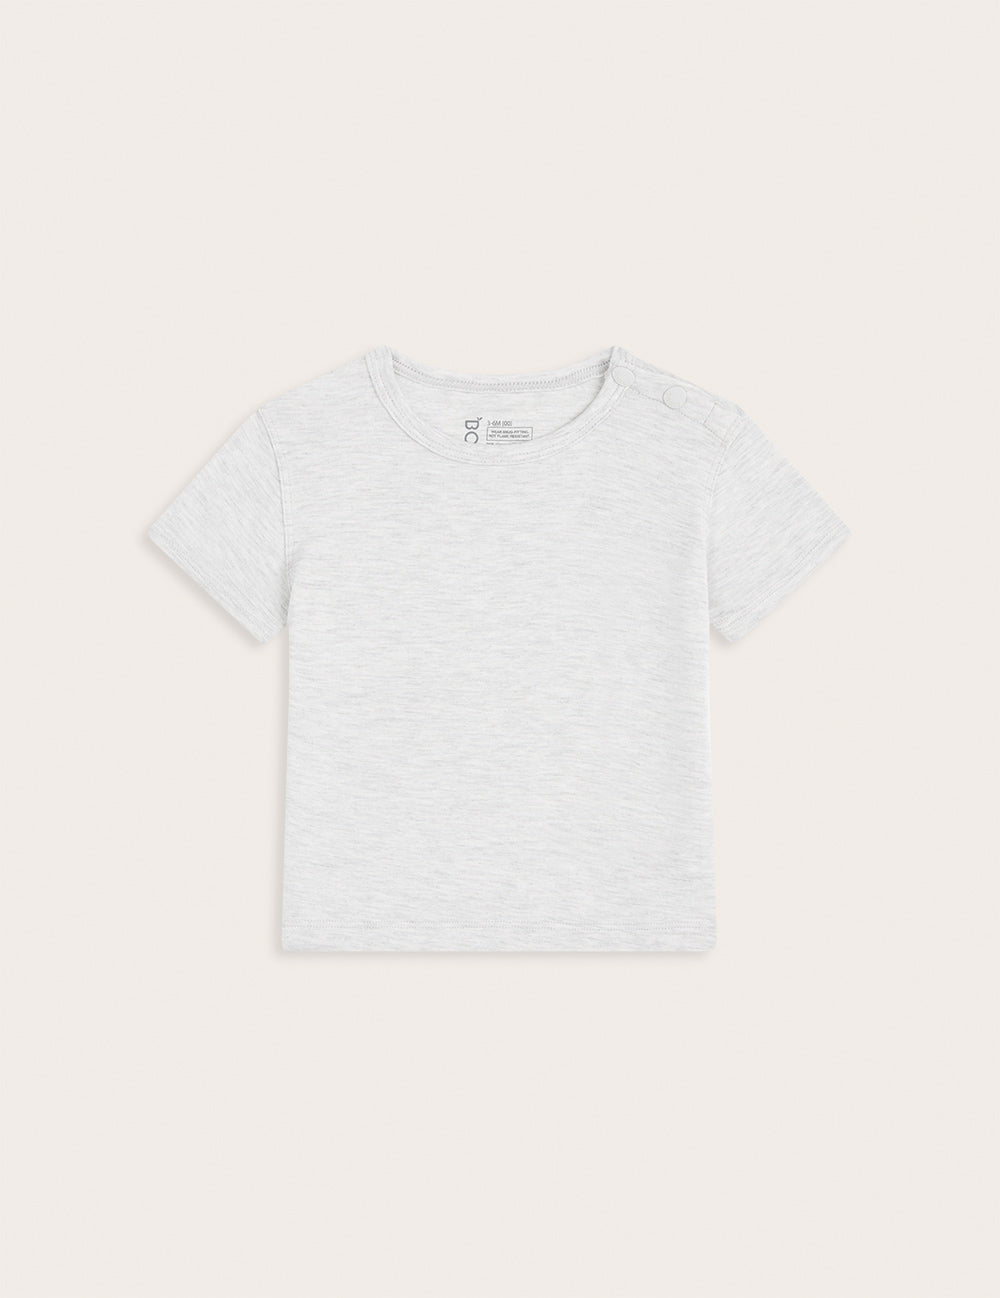 BB1004_HEATHER GREY_Baby Short Sleeve T-Shirt_1.jpg